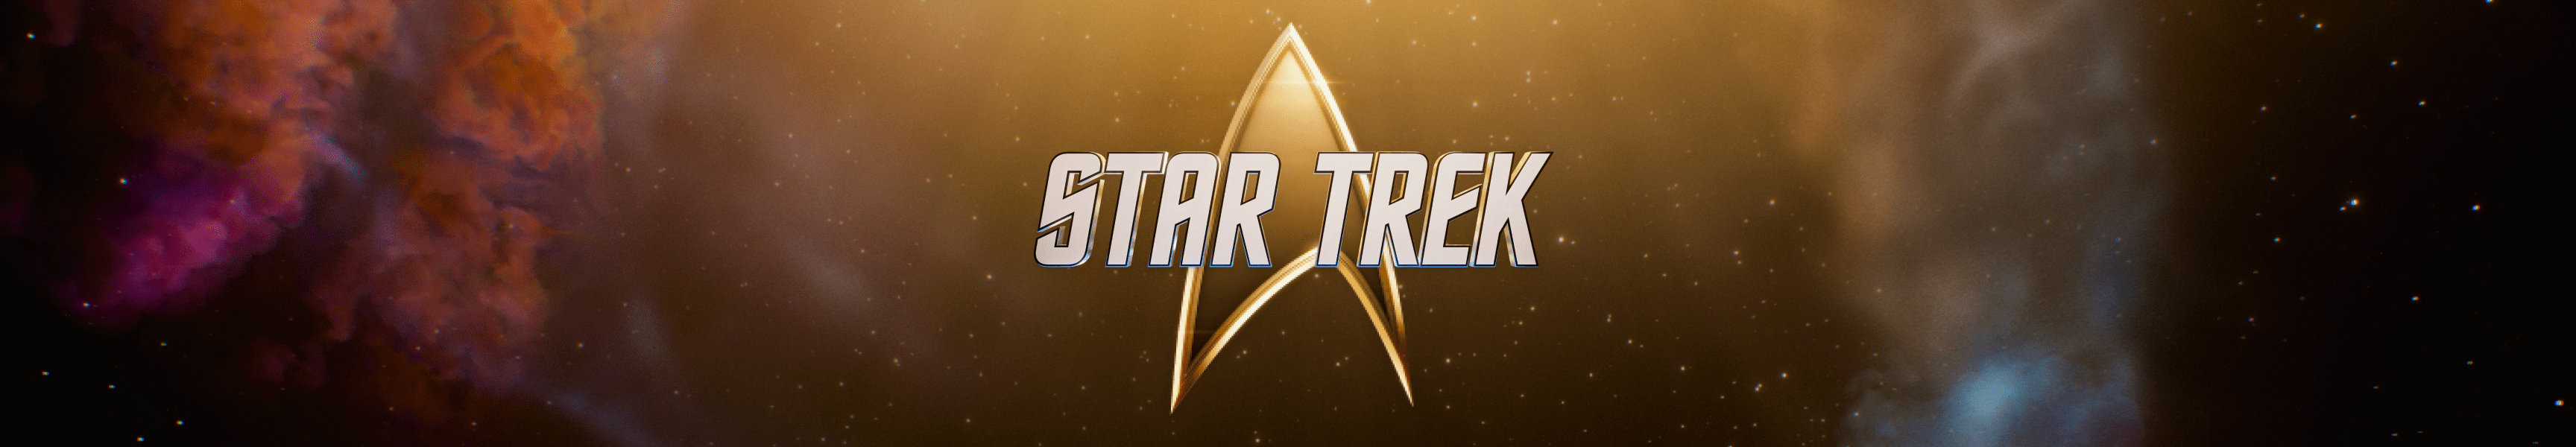 DVD de Star Trek